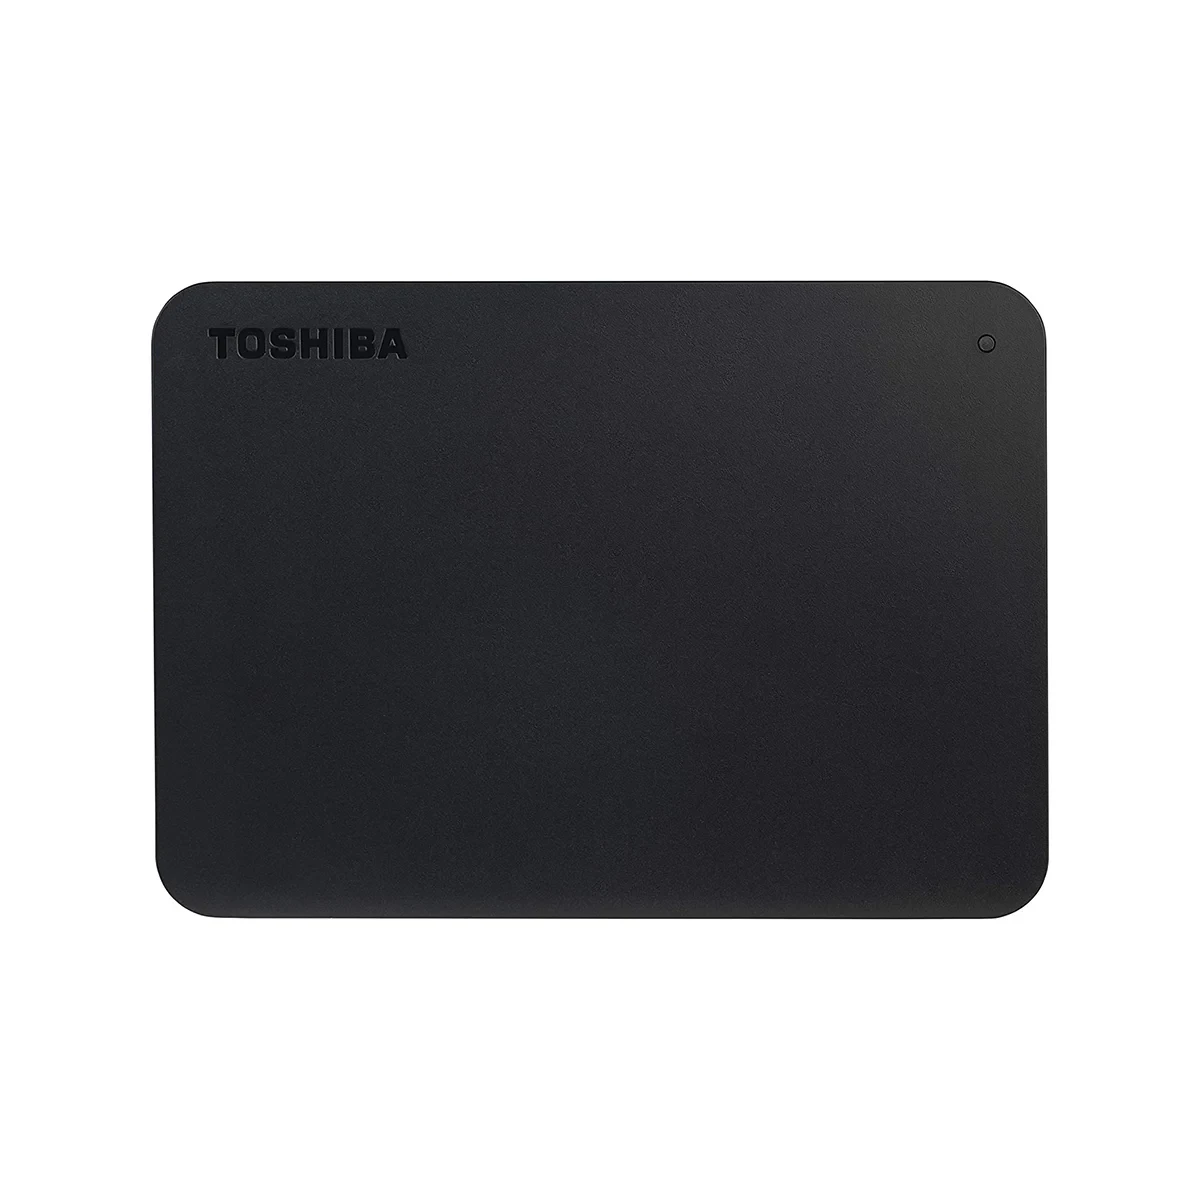 Toshiba 1TB Hard Disk